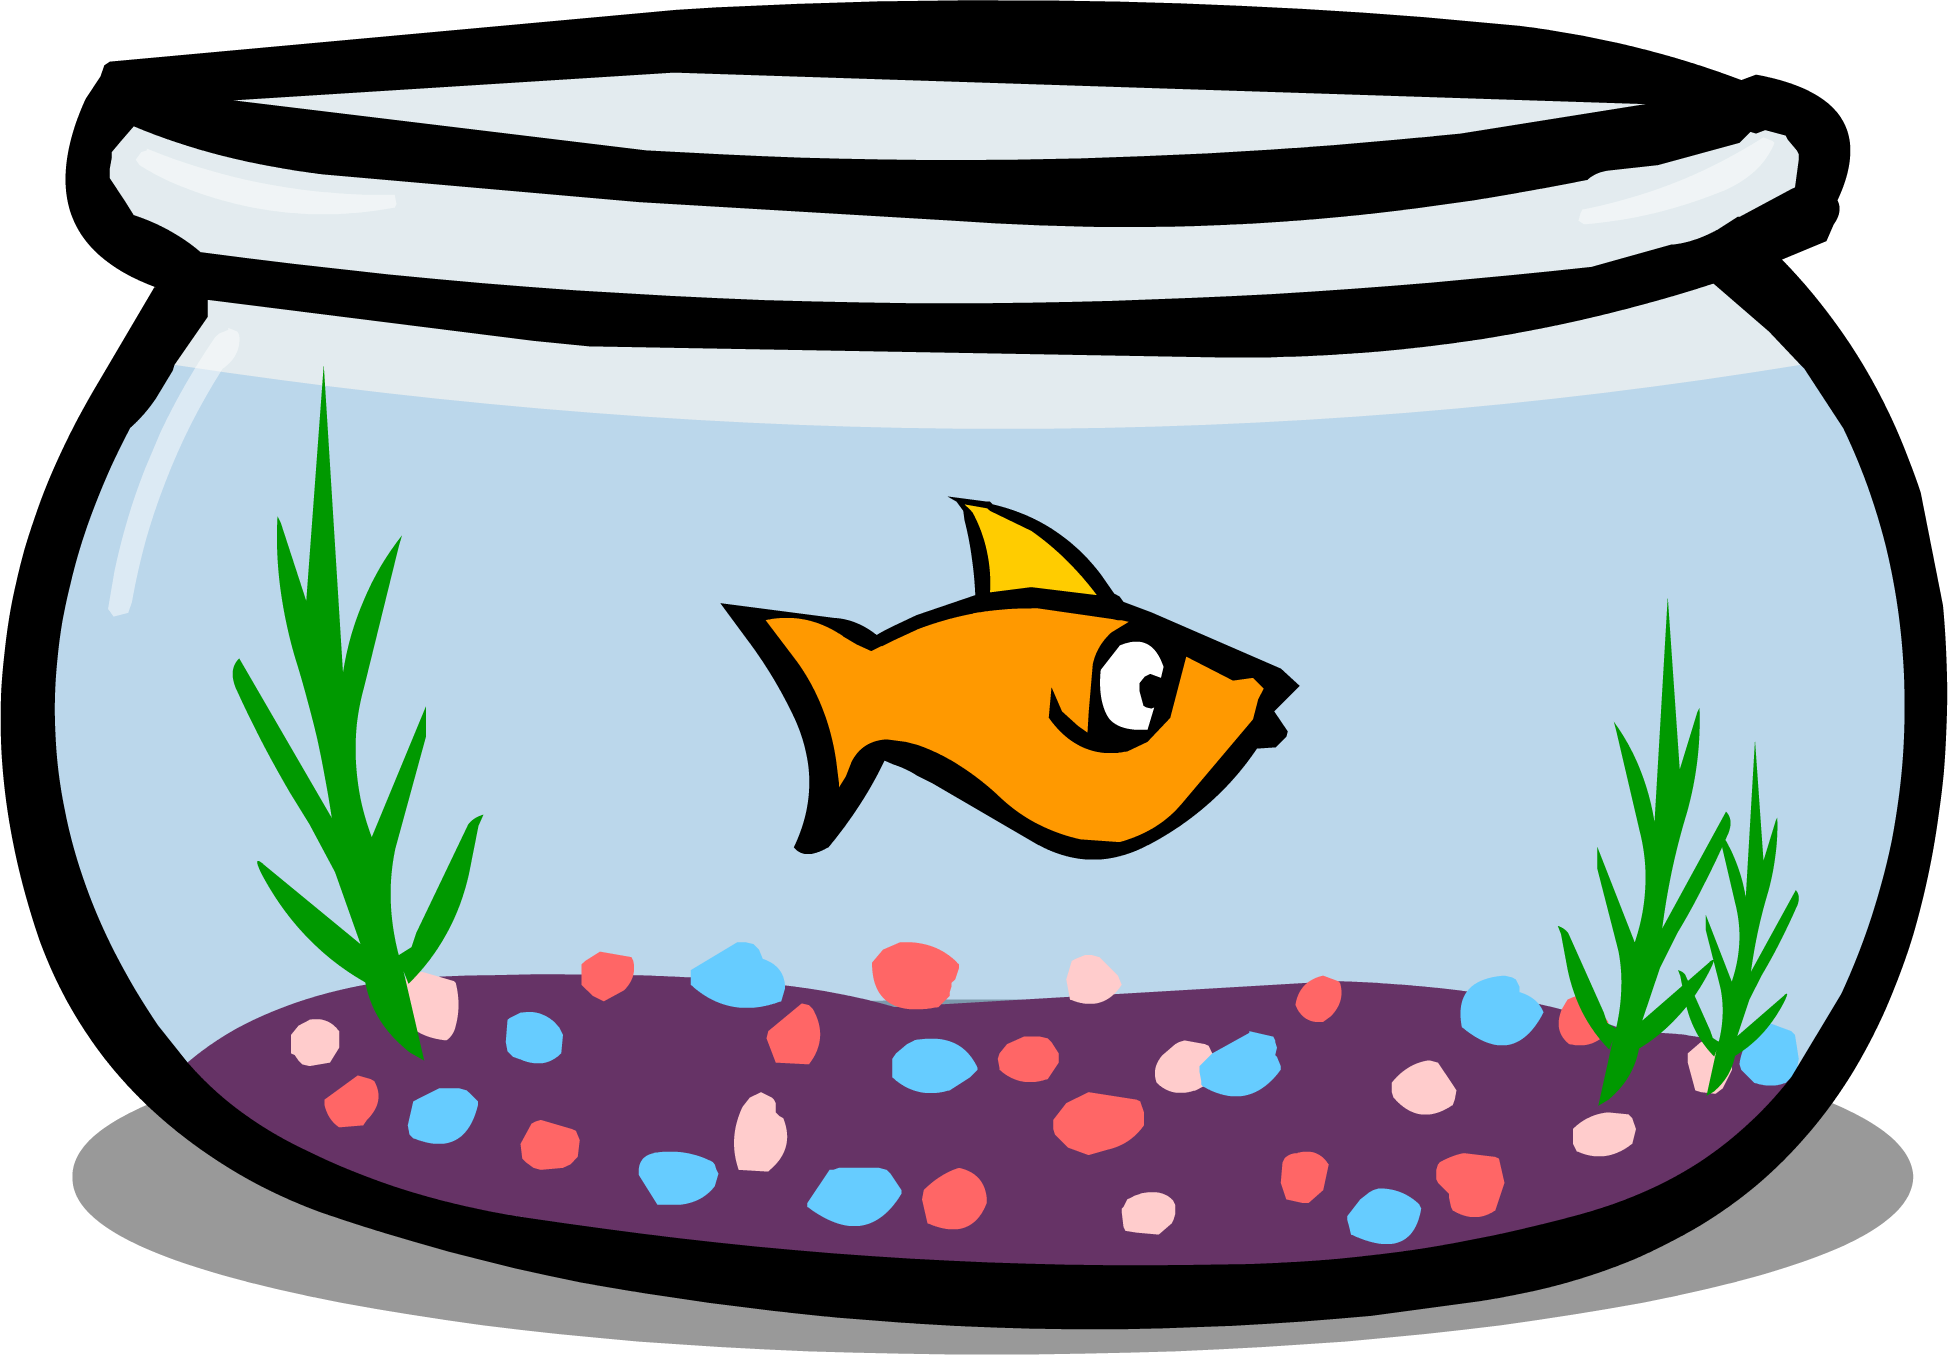 fishbowl clipart fish feeder